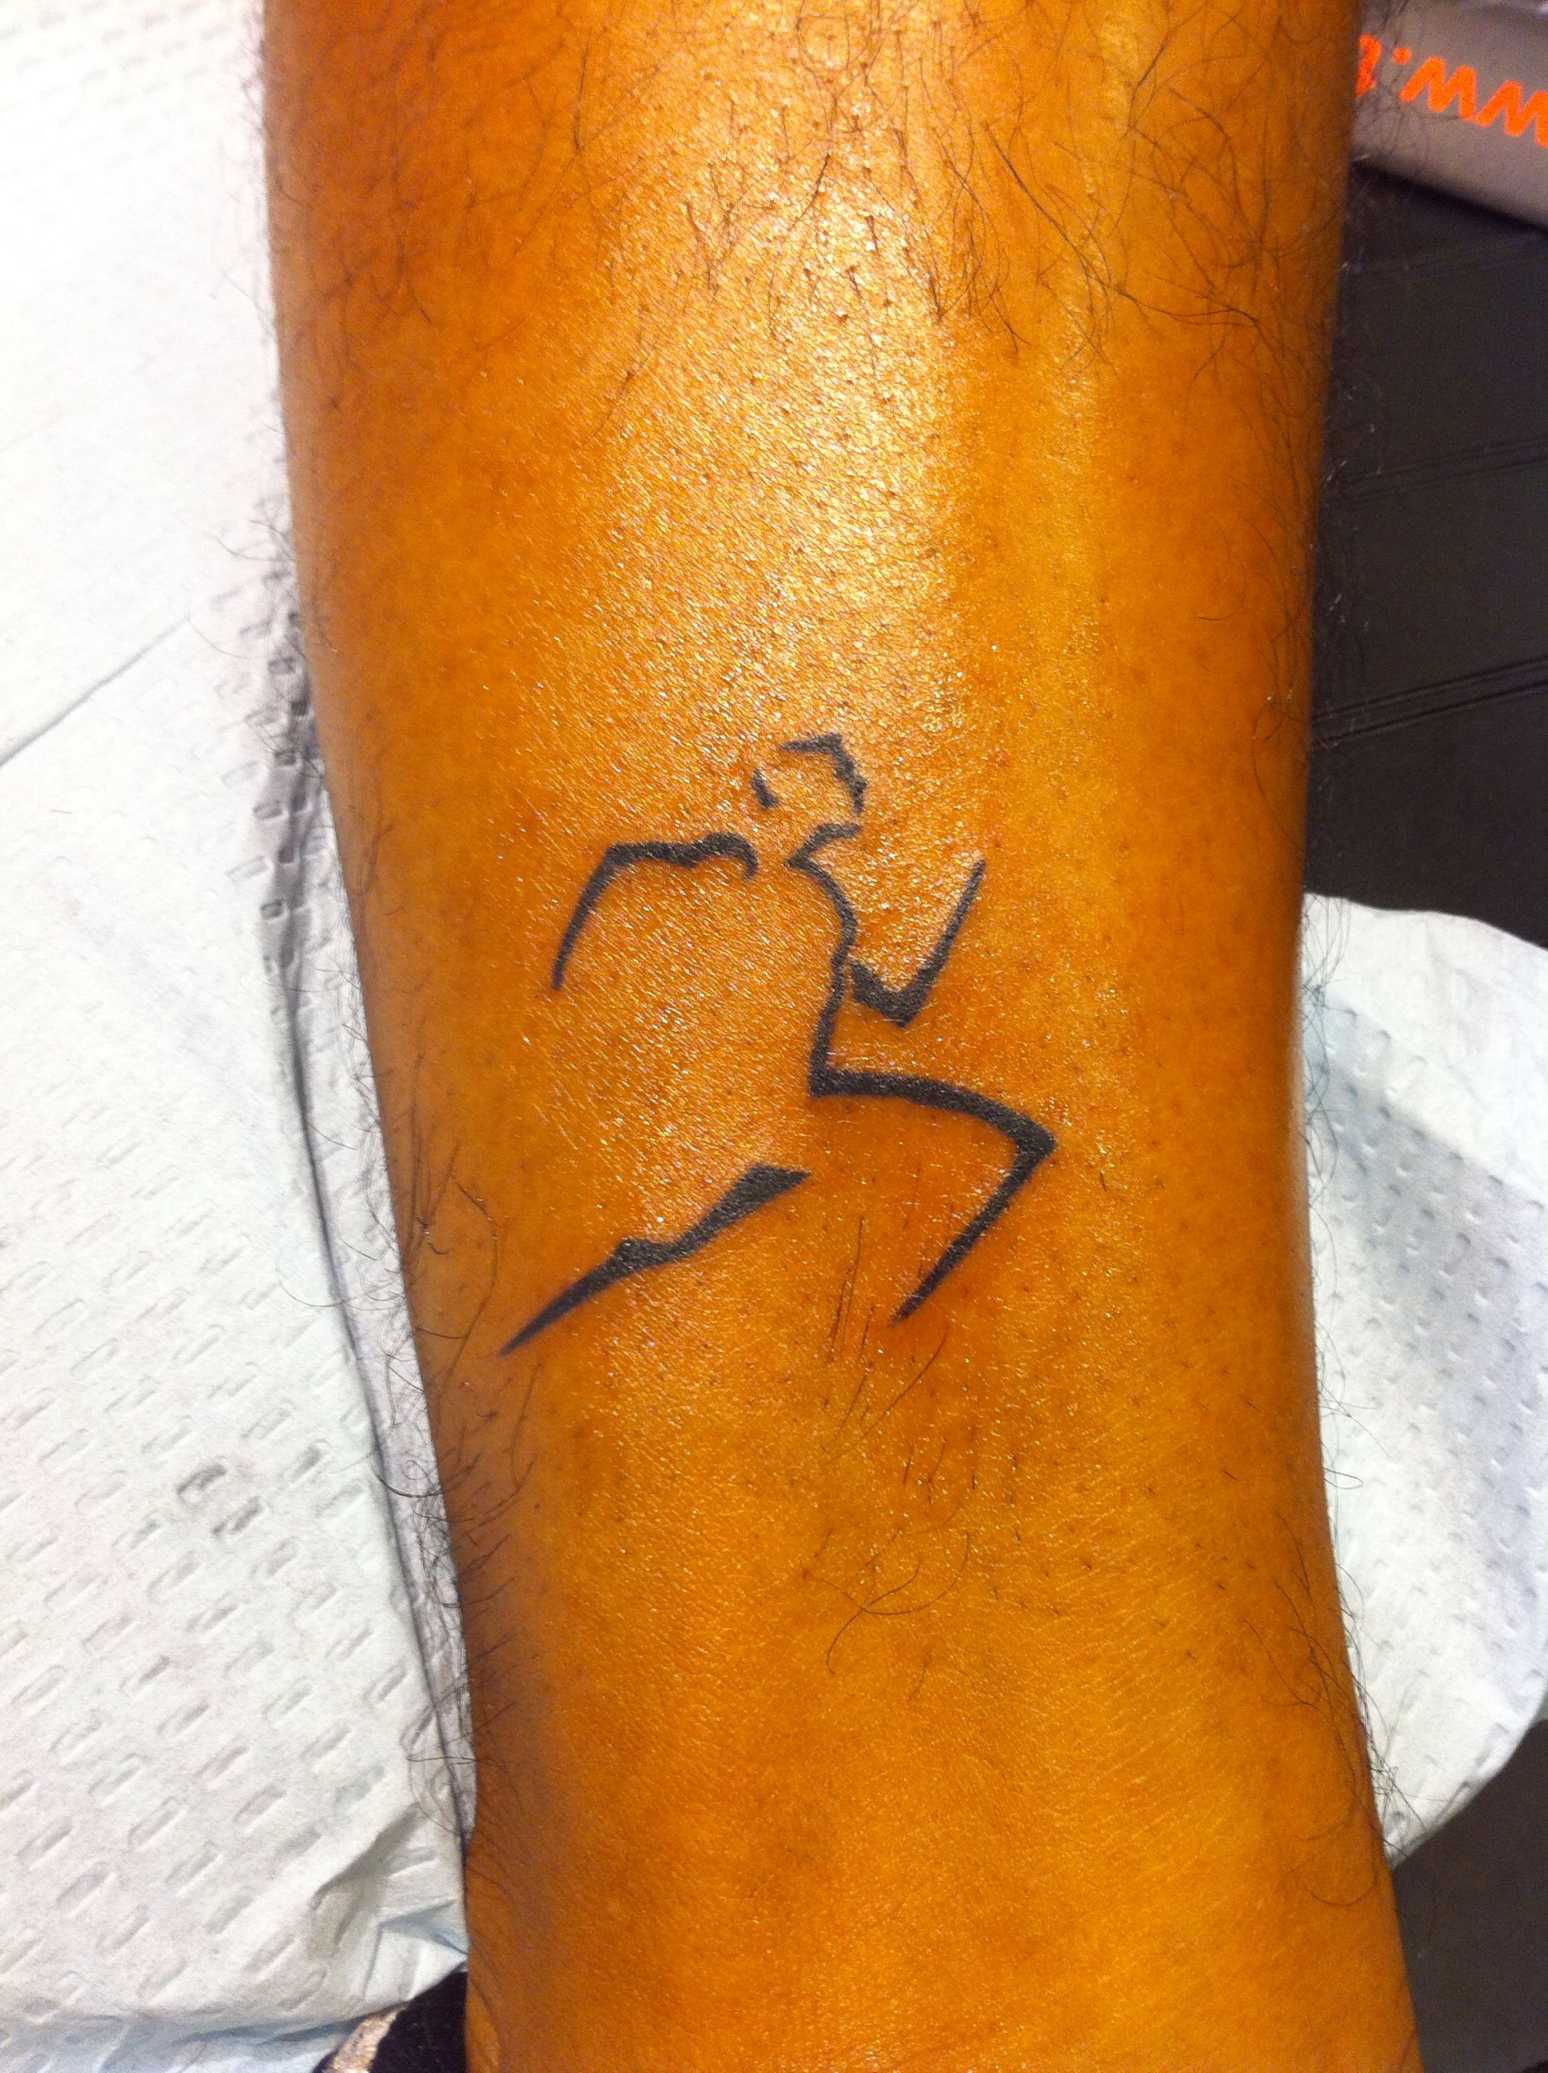 Running man ankle tattoo  Running tattoo, Runner tattoo, Sport